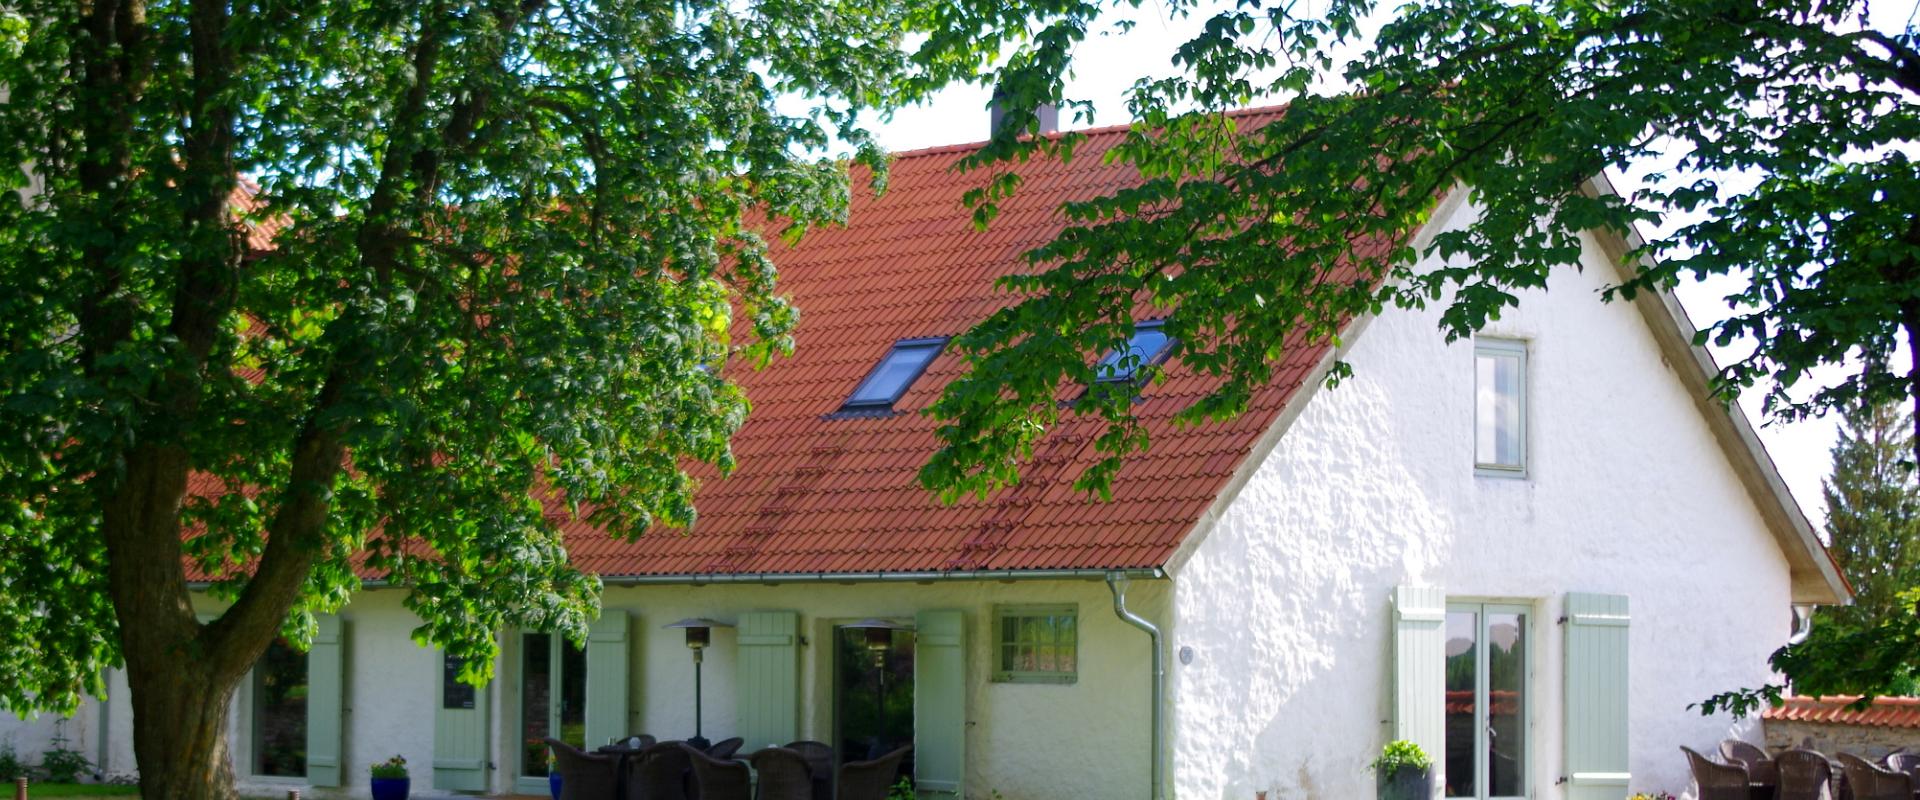 Dagen Haus külalistemaja (Gästehaus Dagen Haus)